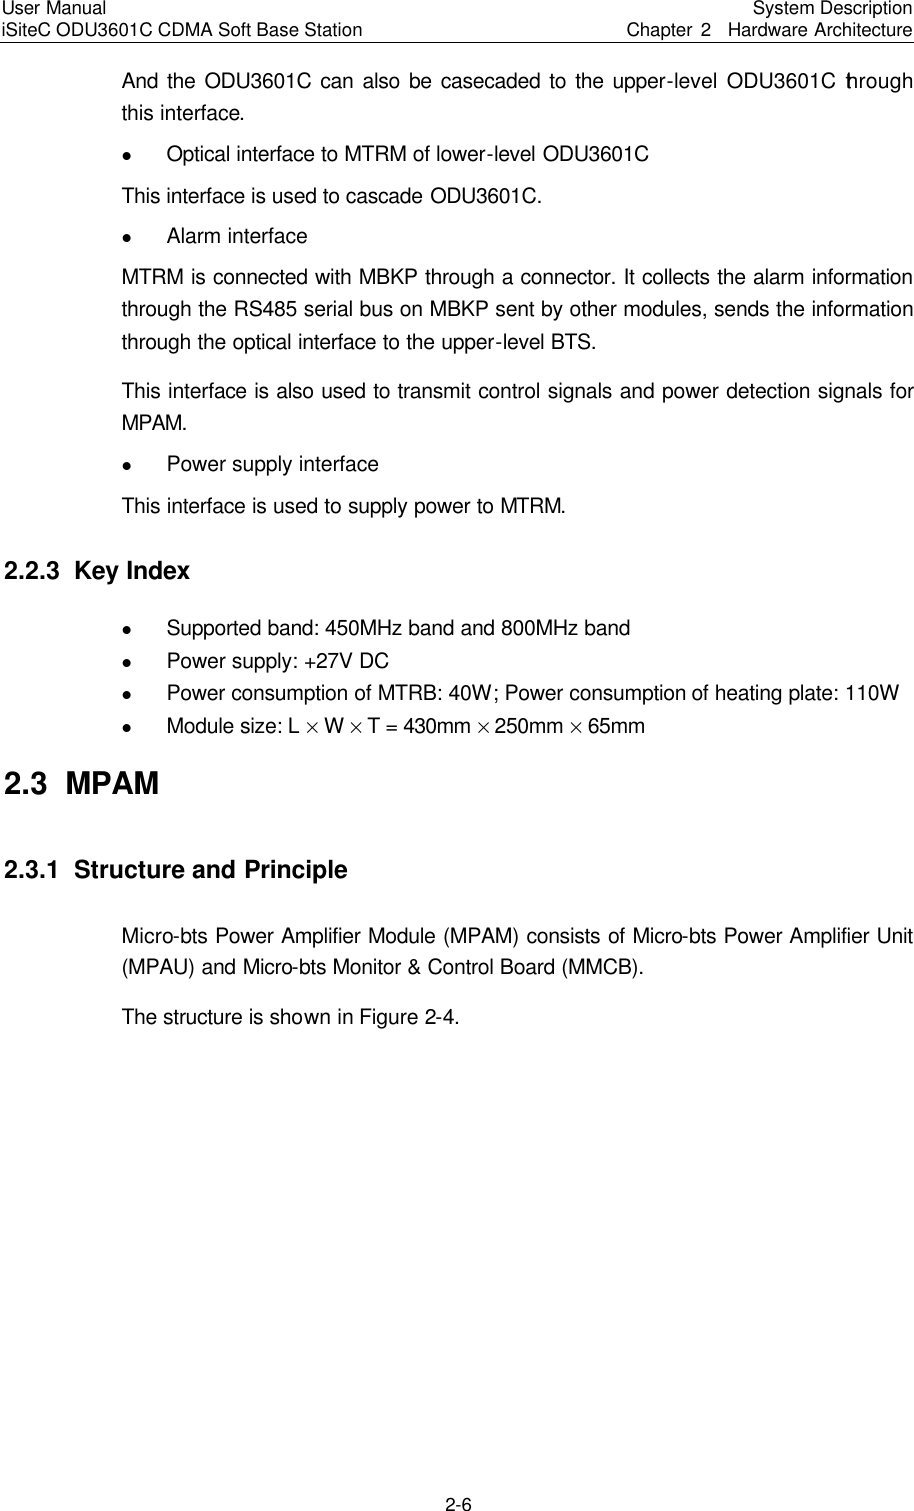 Page 22 of Huawei Technologies ODU3601C-800 CDMA Base Station User Manual 2